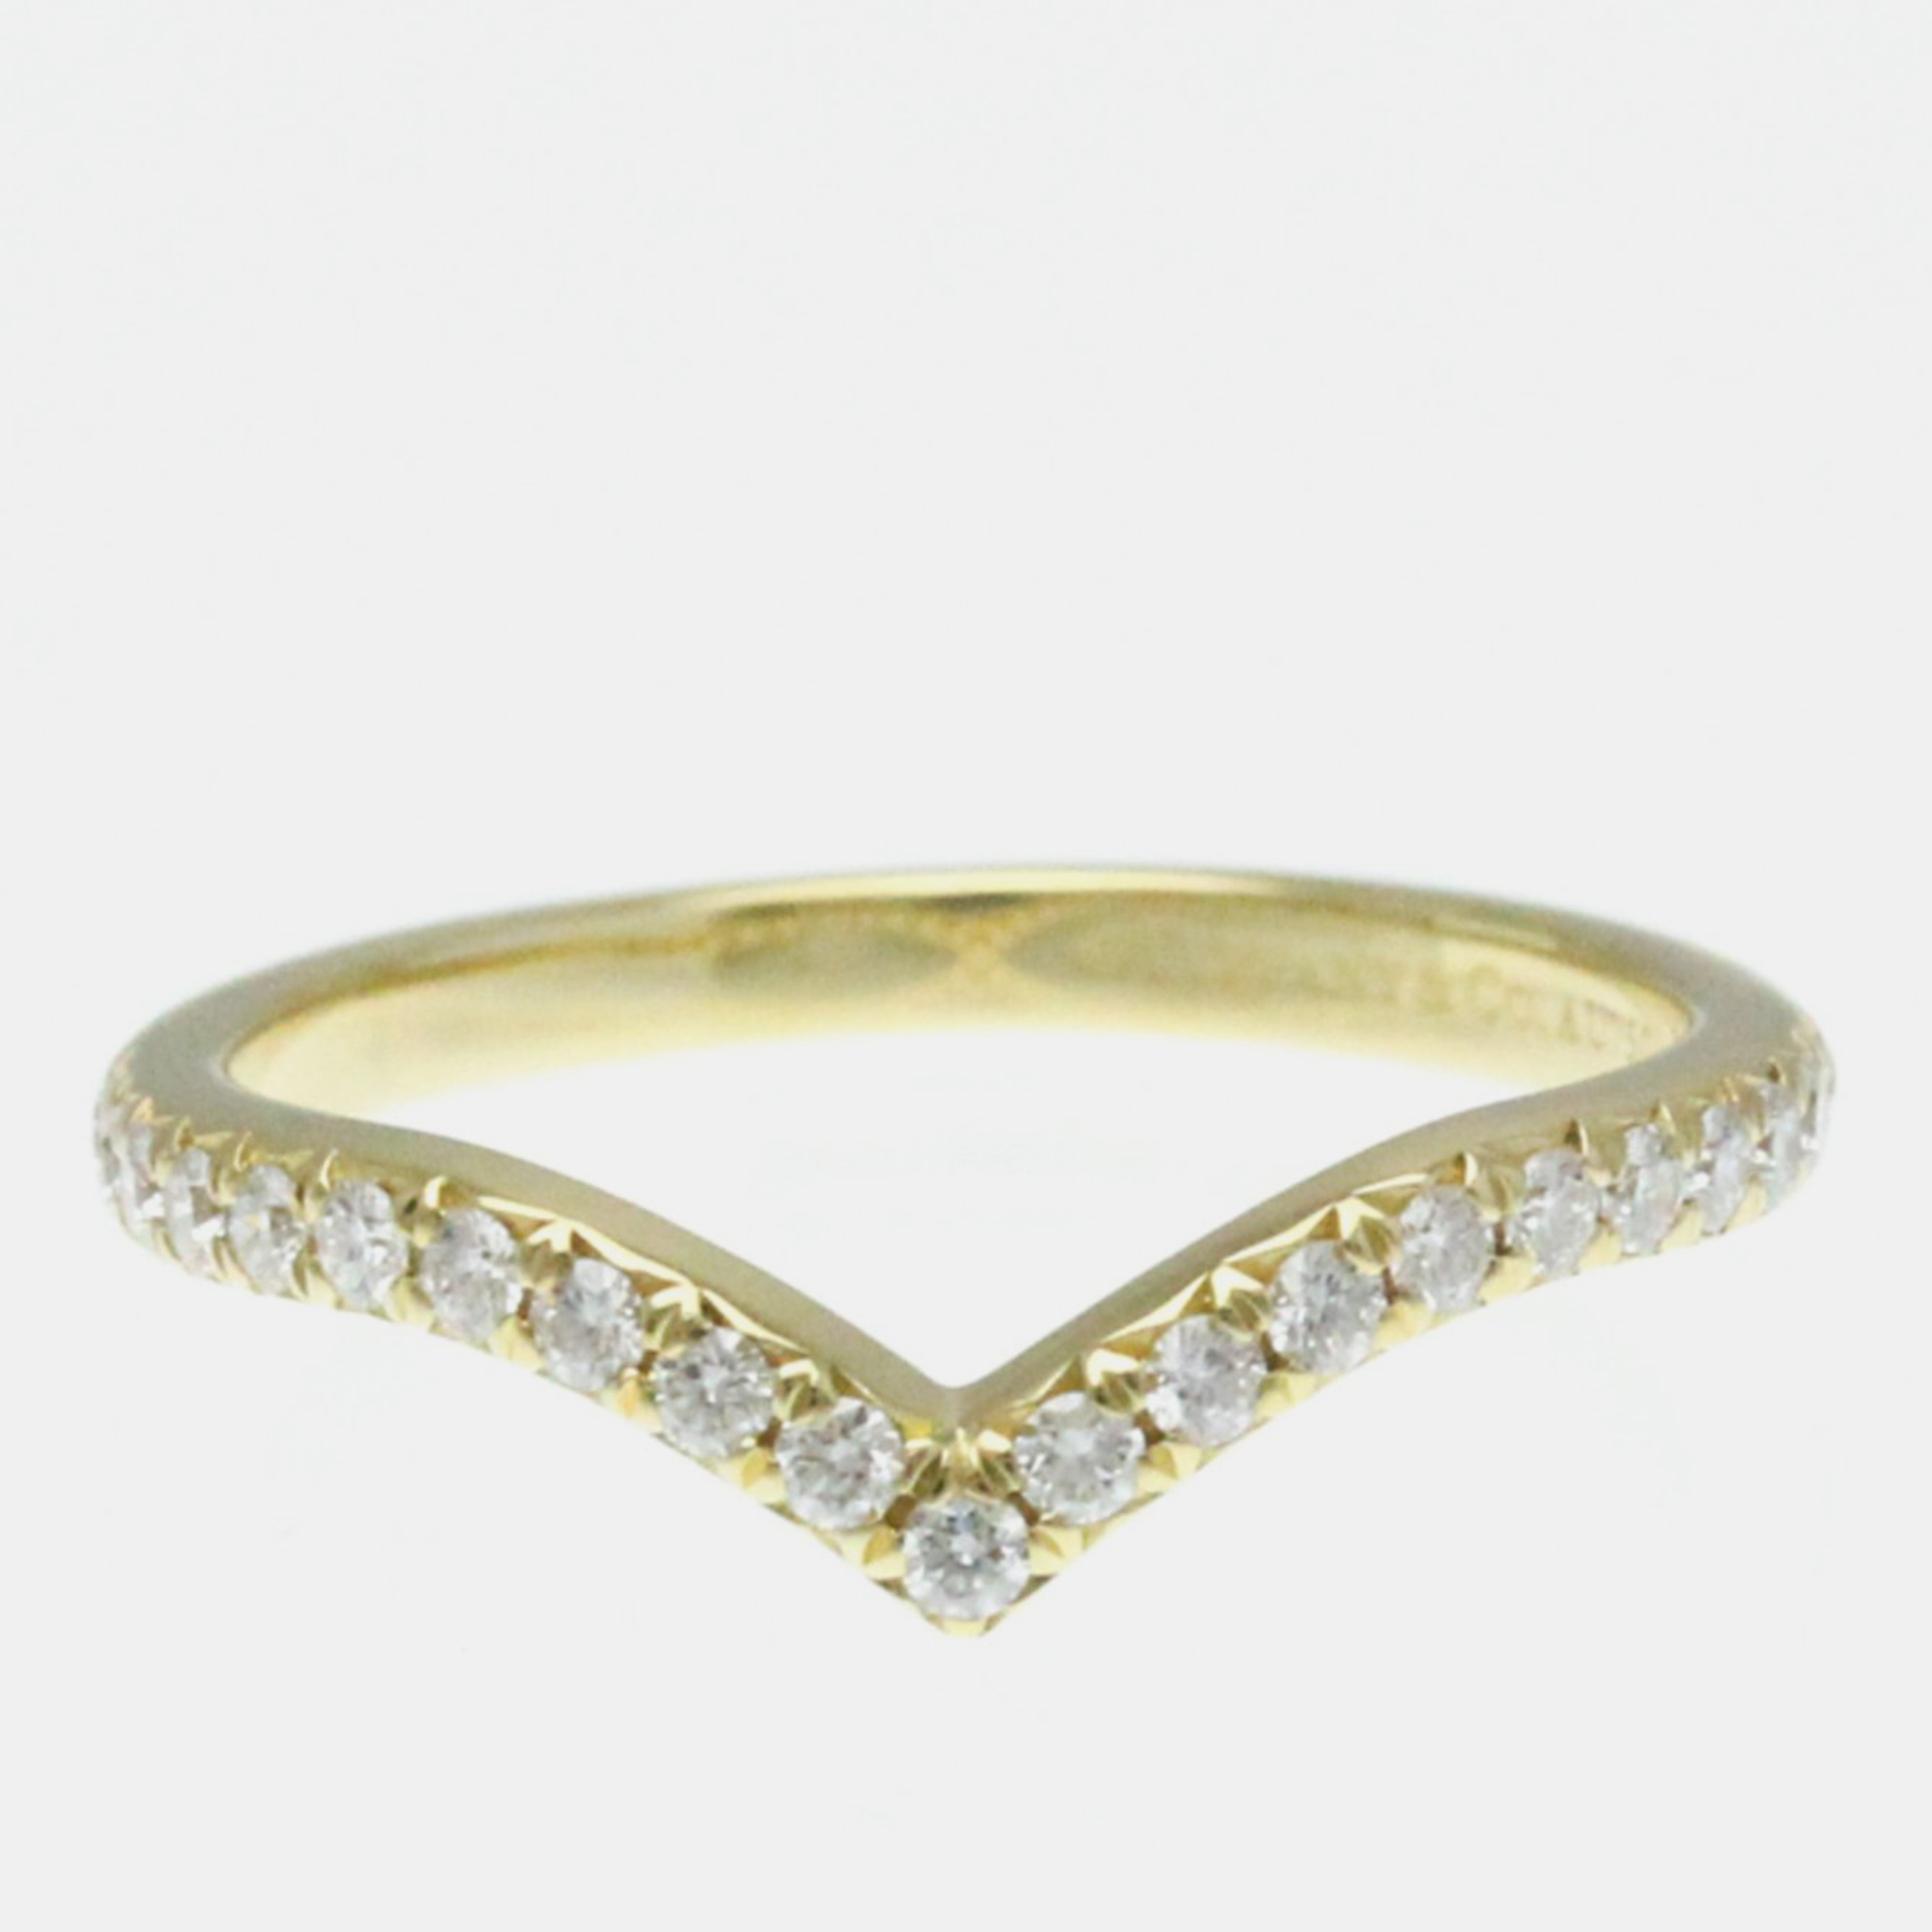 Tiffany & co. 18k yellow gold and diamond v soleste band ring eu 48